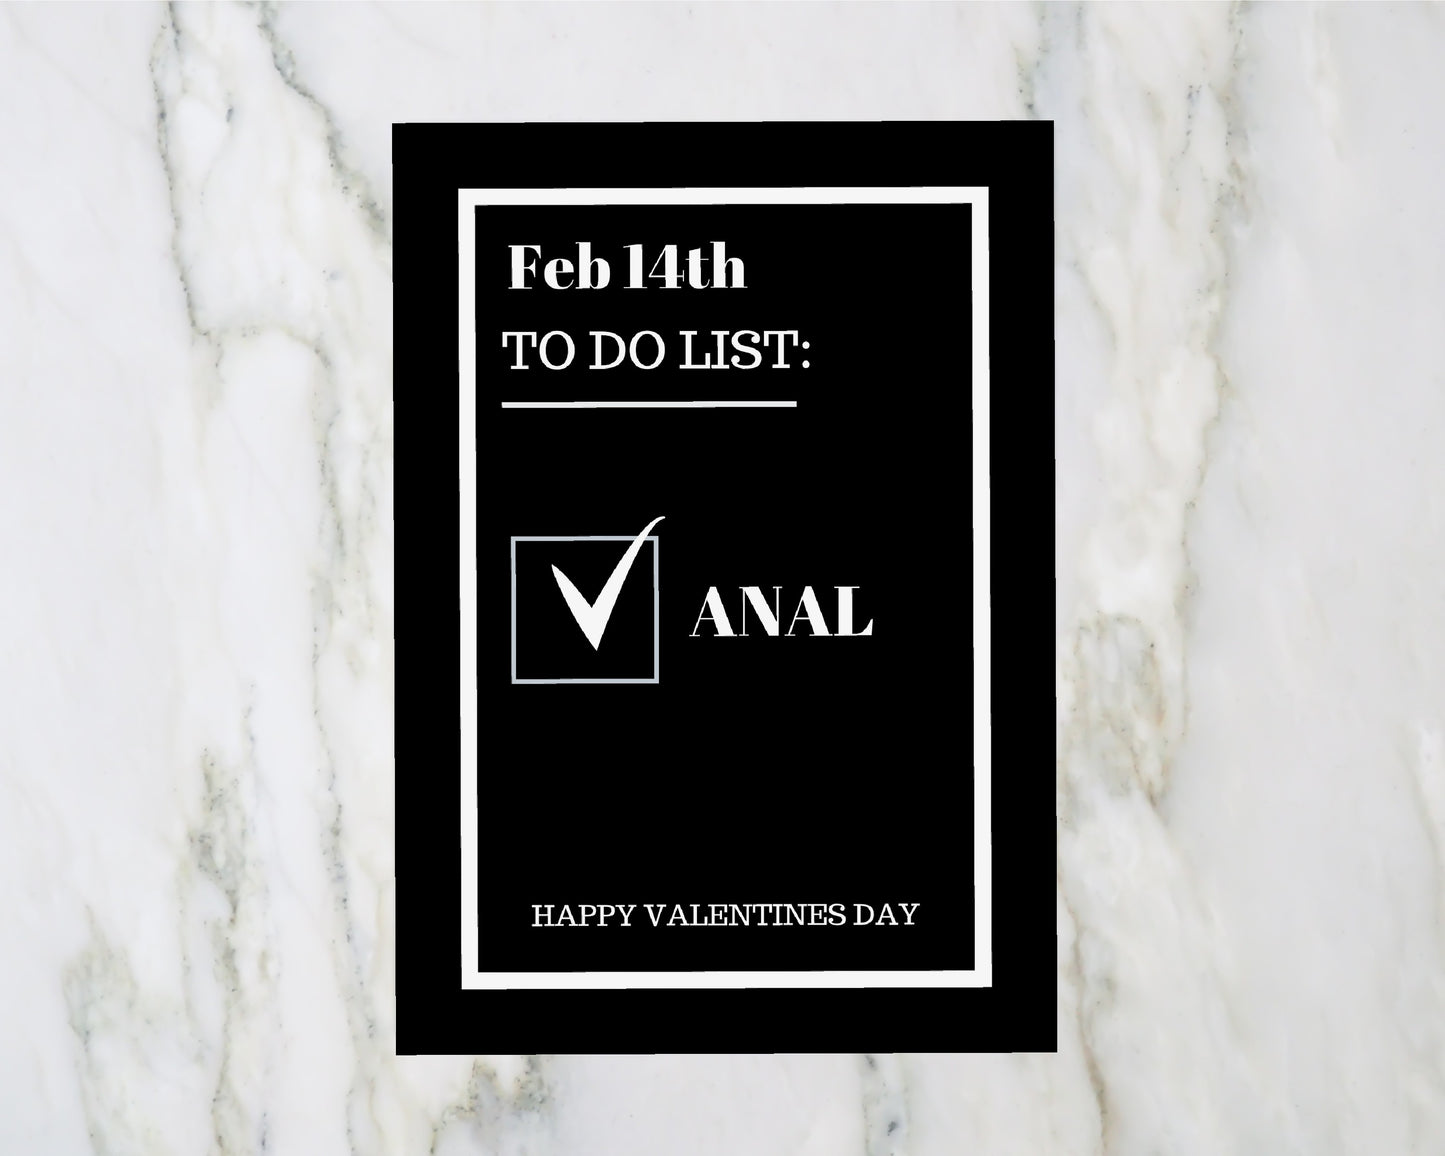 Valentines Card | Feb 14th To Do List - Anal | Funny Card | Joke Card | Rude Card